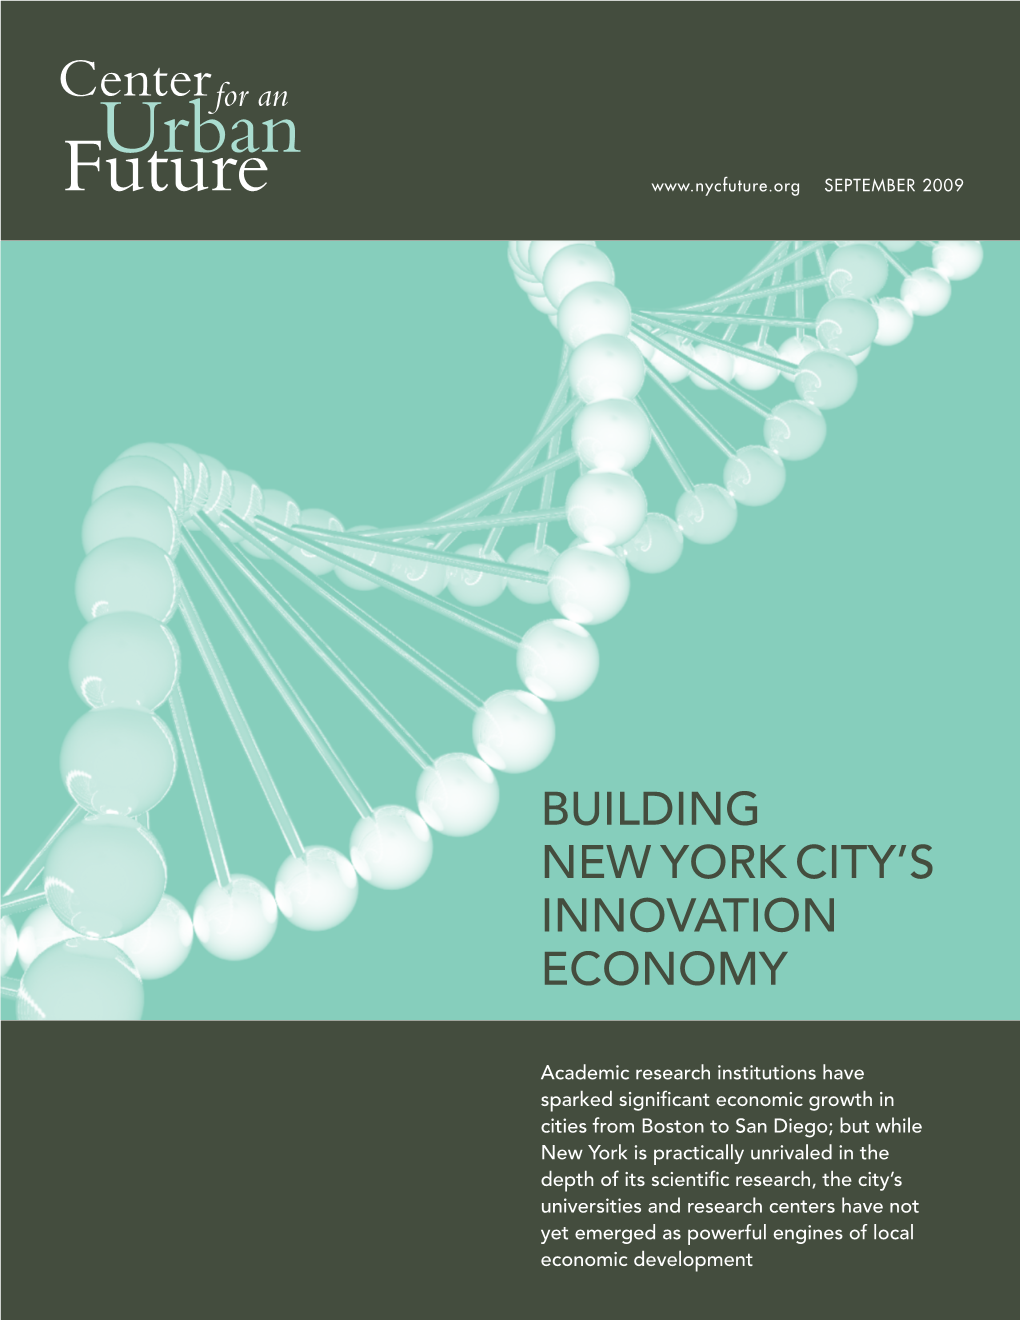 Building New York City's Innovation Economy